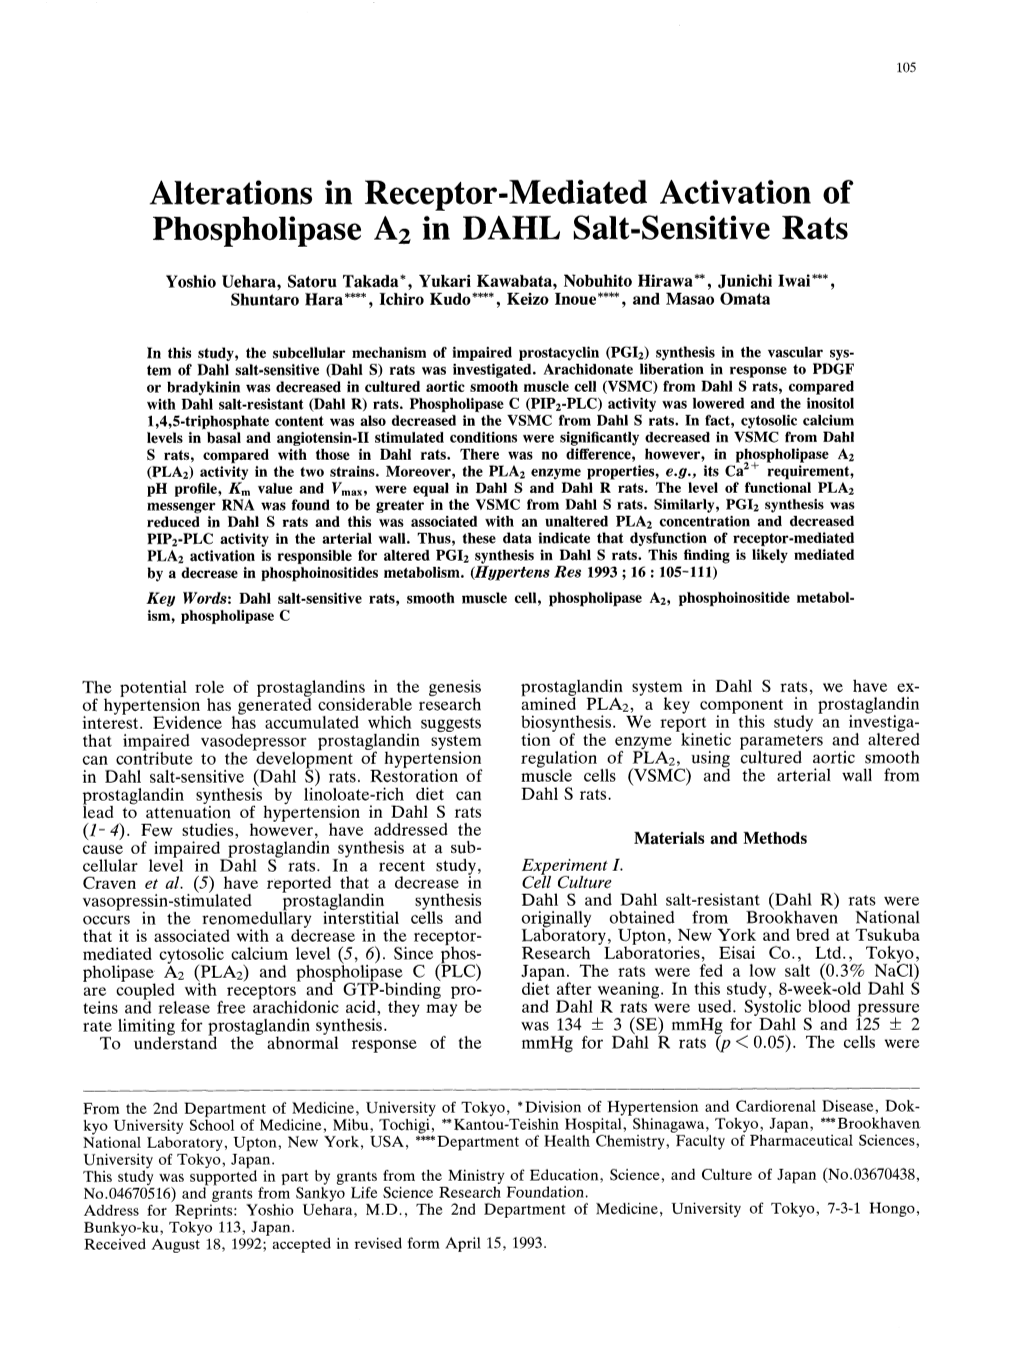 Alterations in Receptor-Mediated Activation of Phospholipase AZ in DAHL Salt-Sensitive Rats